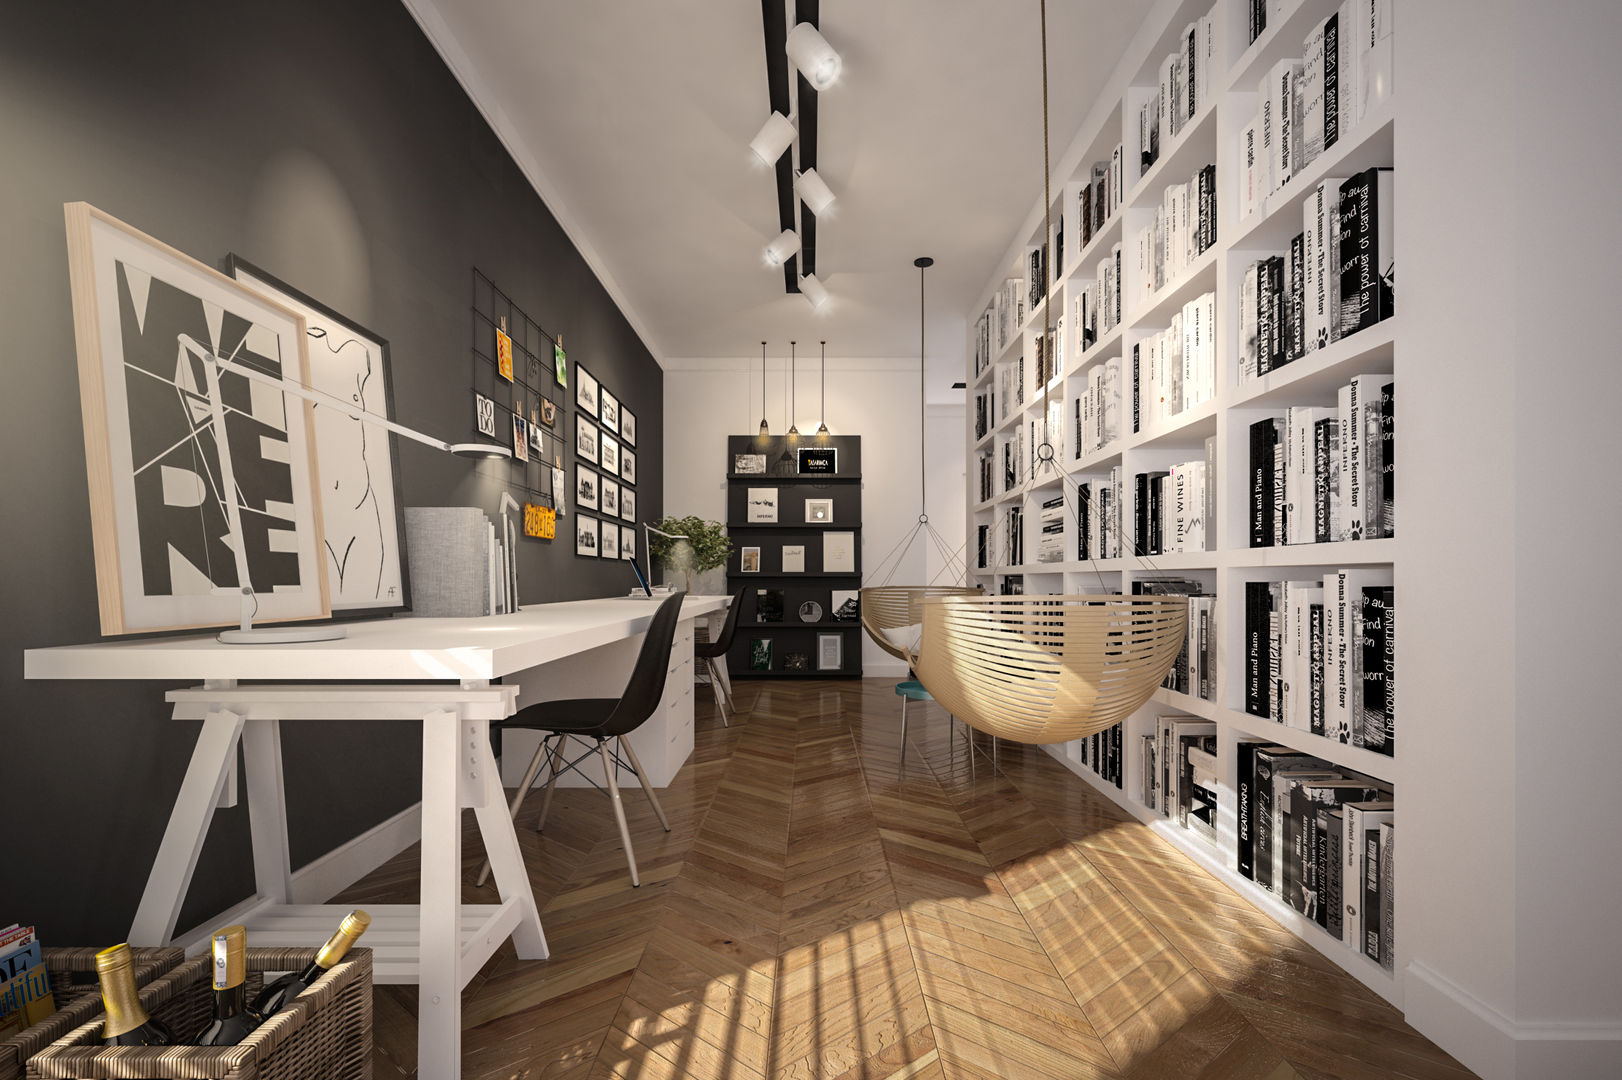 D HOUSE, Tasarımca Desıgn Offıce Tasarımca Desıgn Offıce Oficinas de estilo moderno